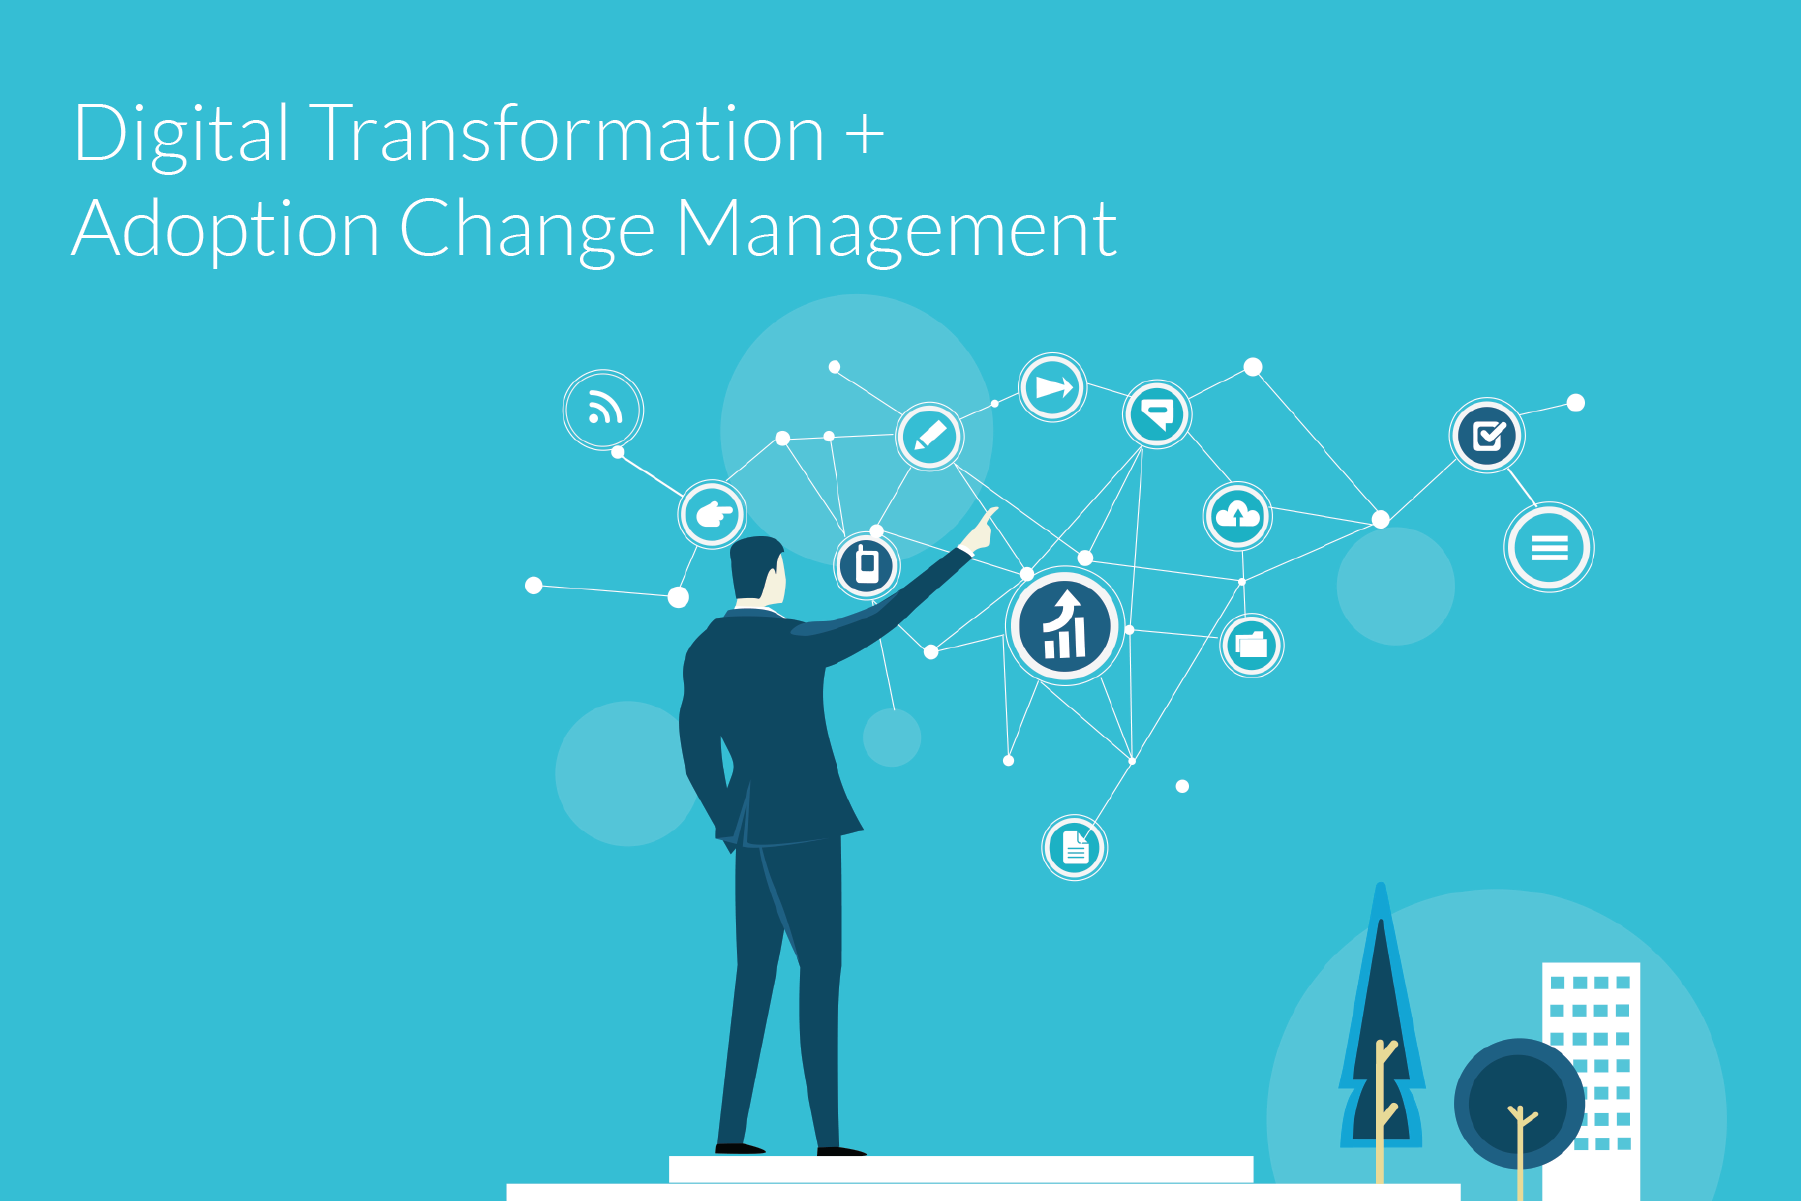 Digital Transformation through Adoption Change Management